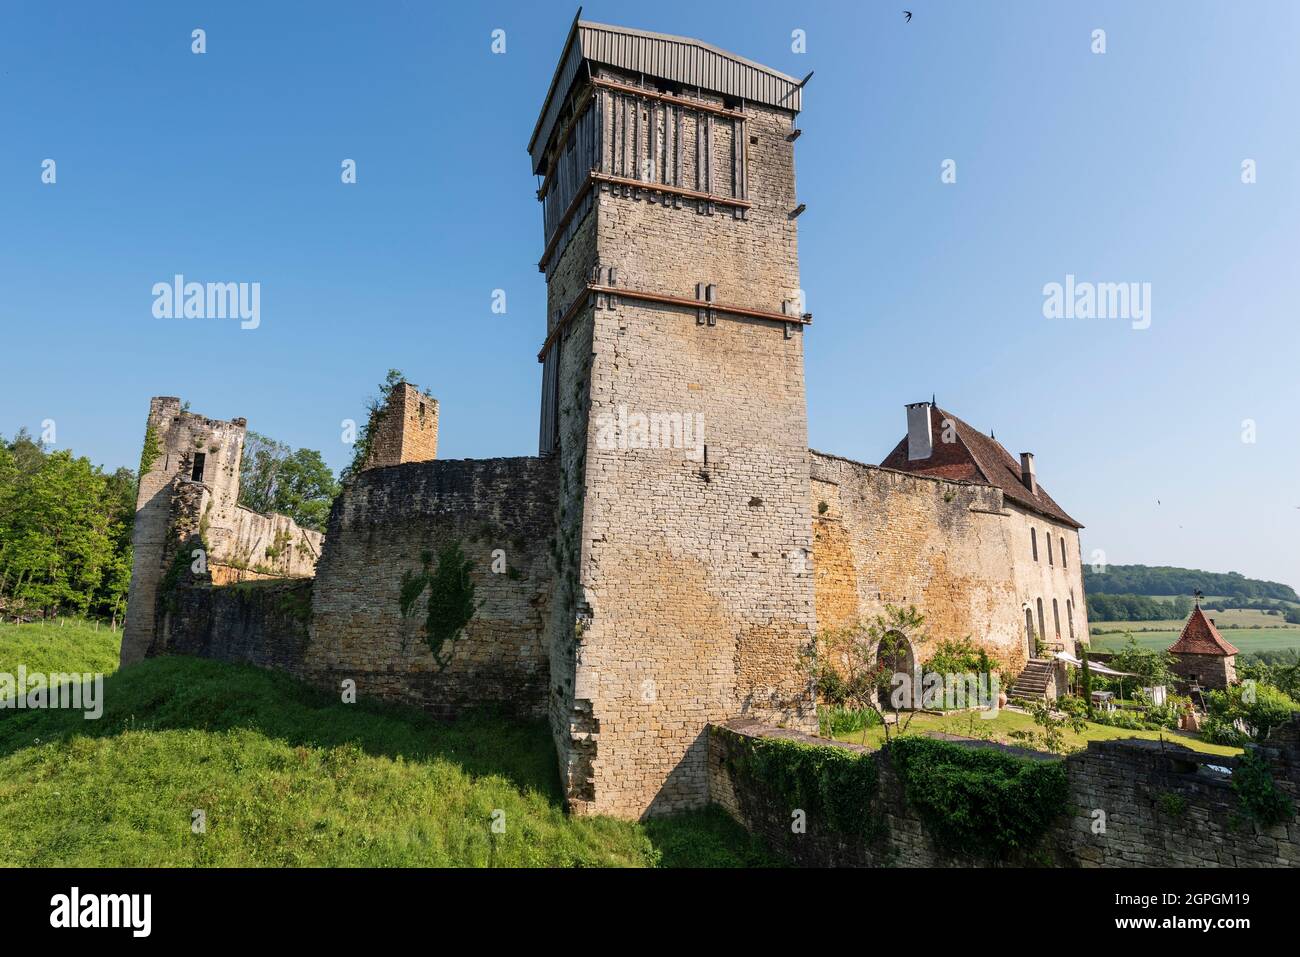 France, Haute Saone, Oricourt, medieval castle of Oricourt from the 12th century Stock Photo